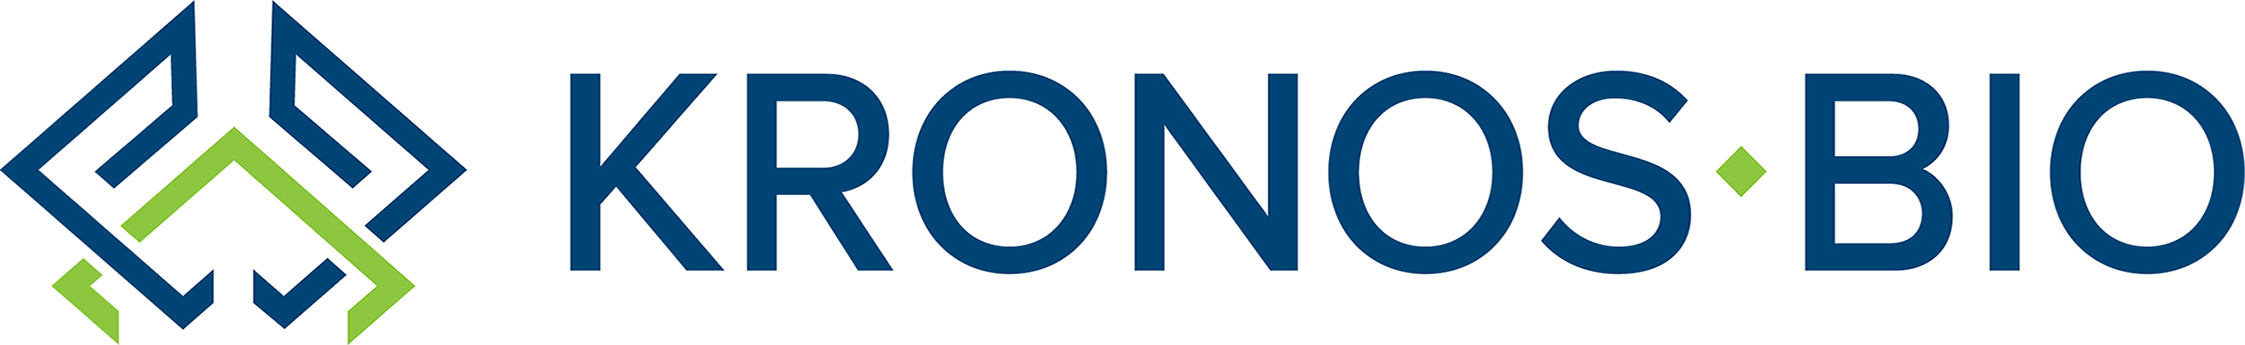 KronosBio_Logo.jpg